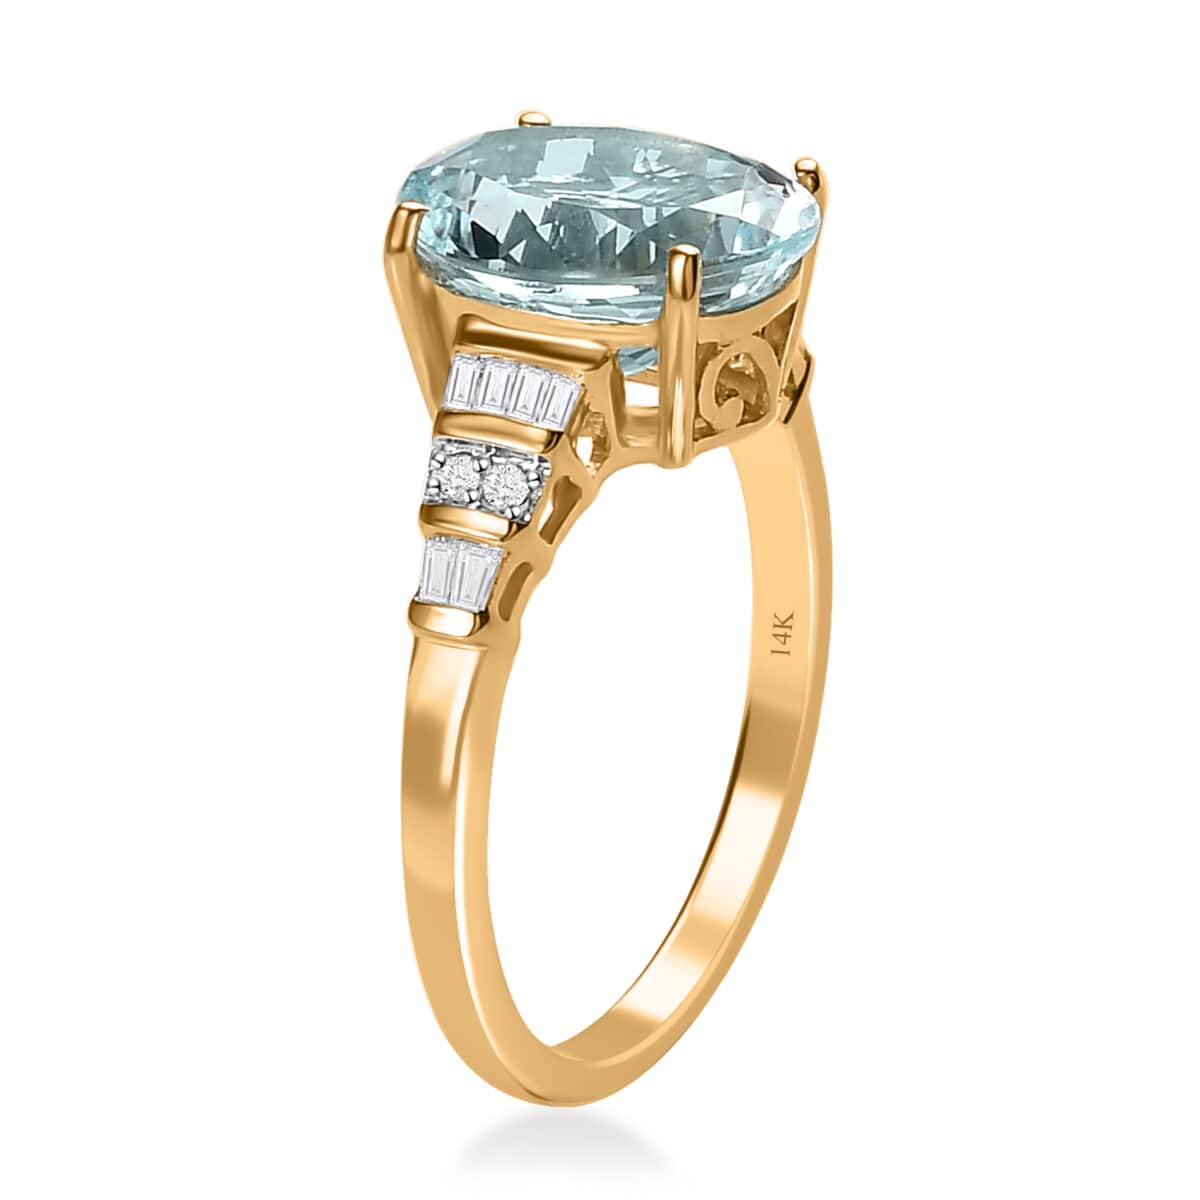 Luxoro 14K Yellow Gold AAA Mangoro Aquamarine, Diamond (G-H, I3) Ring (Size 5.0) 3.25 ctw image number 3